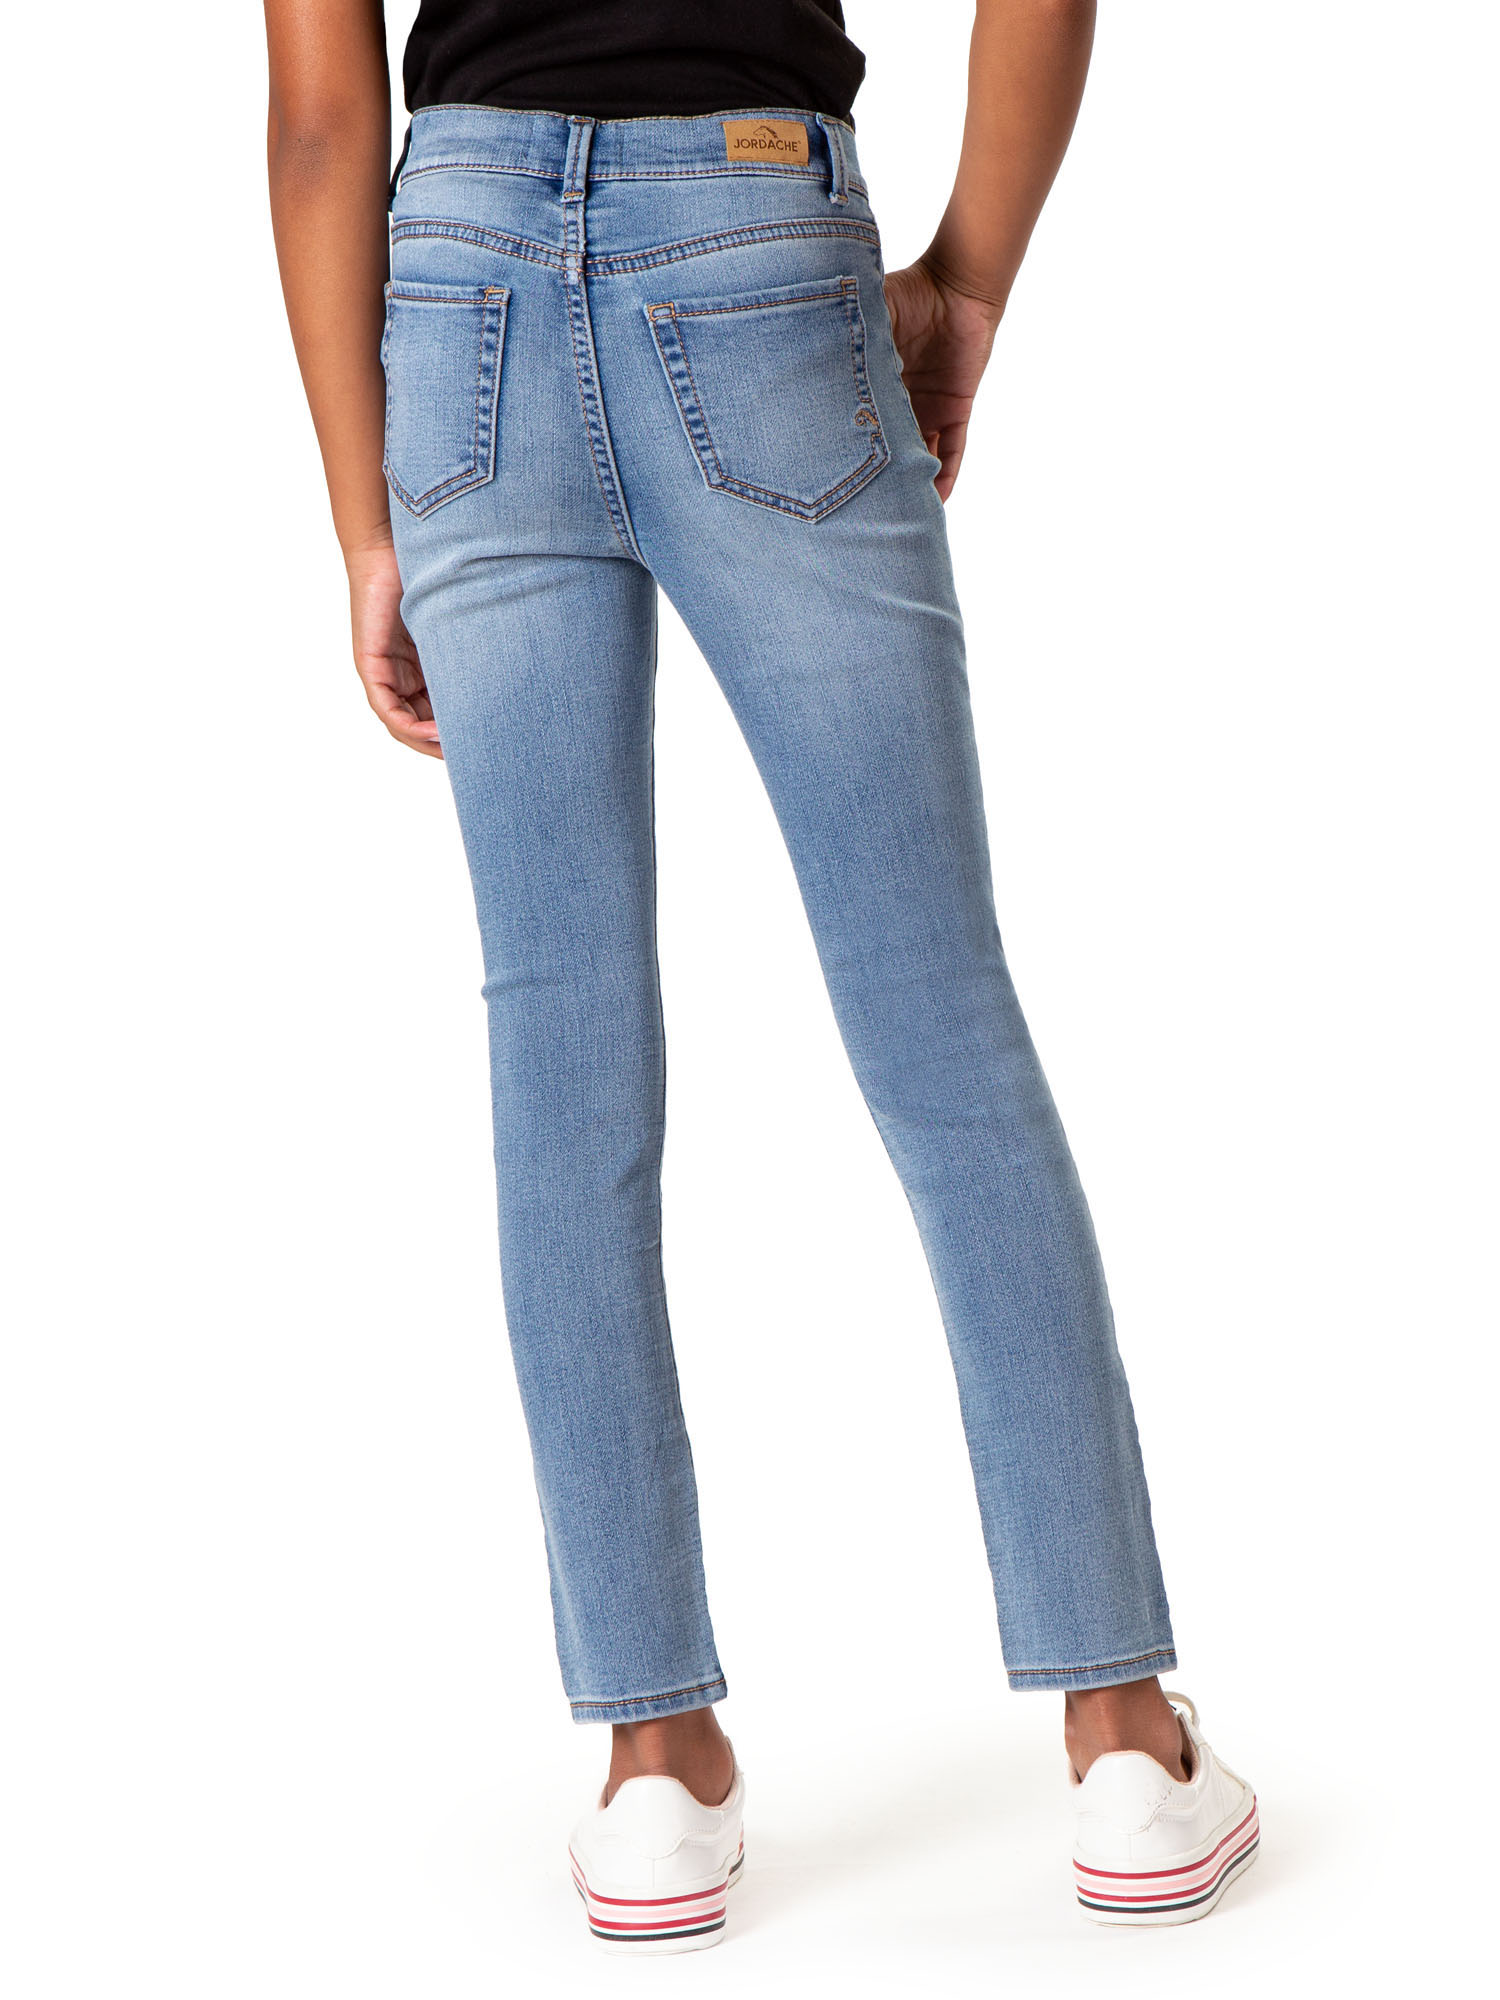 Jordache Girls Super Skinny High Rise Jeans, Sizes 5-18 & Slim - image 2 of 7